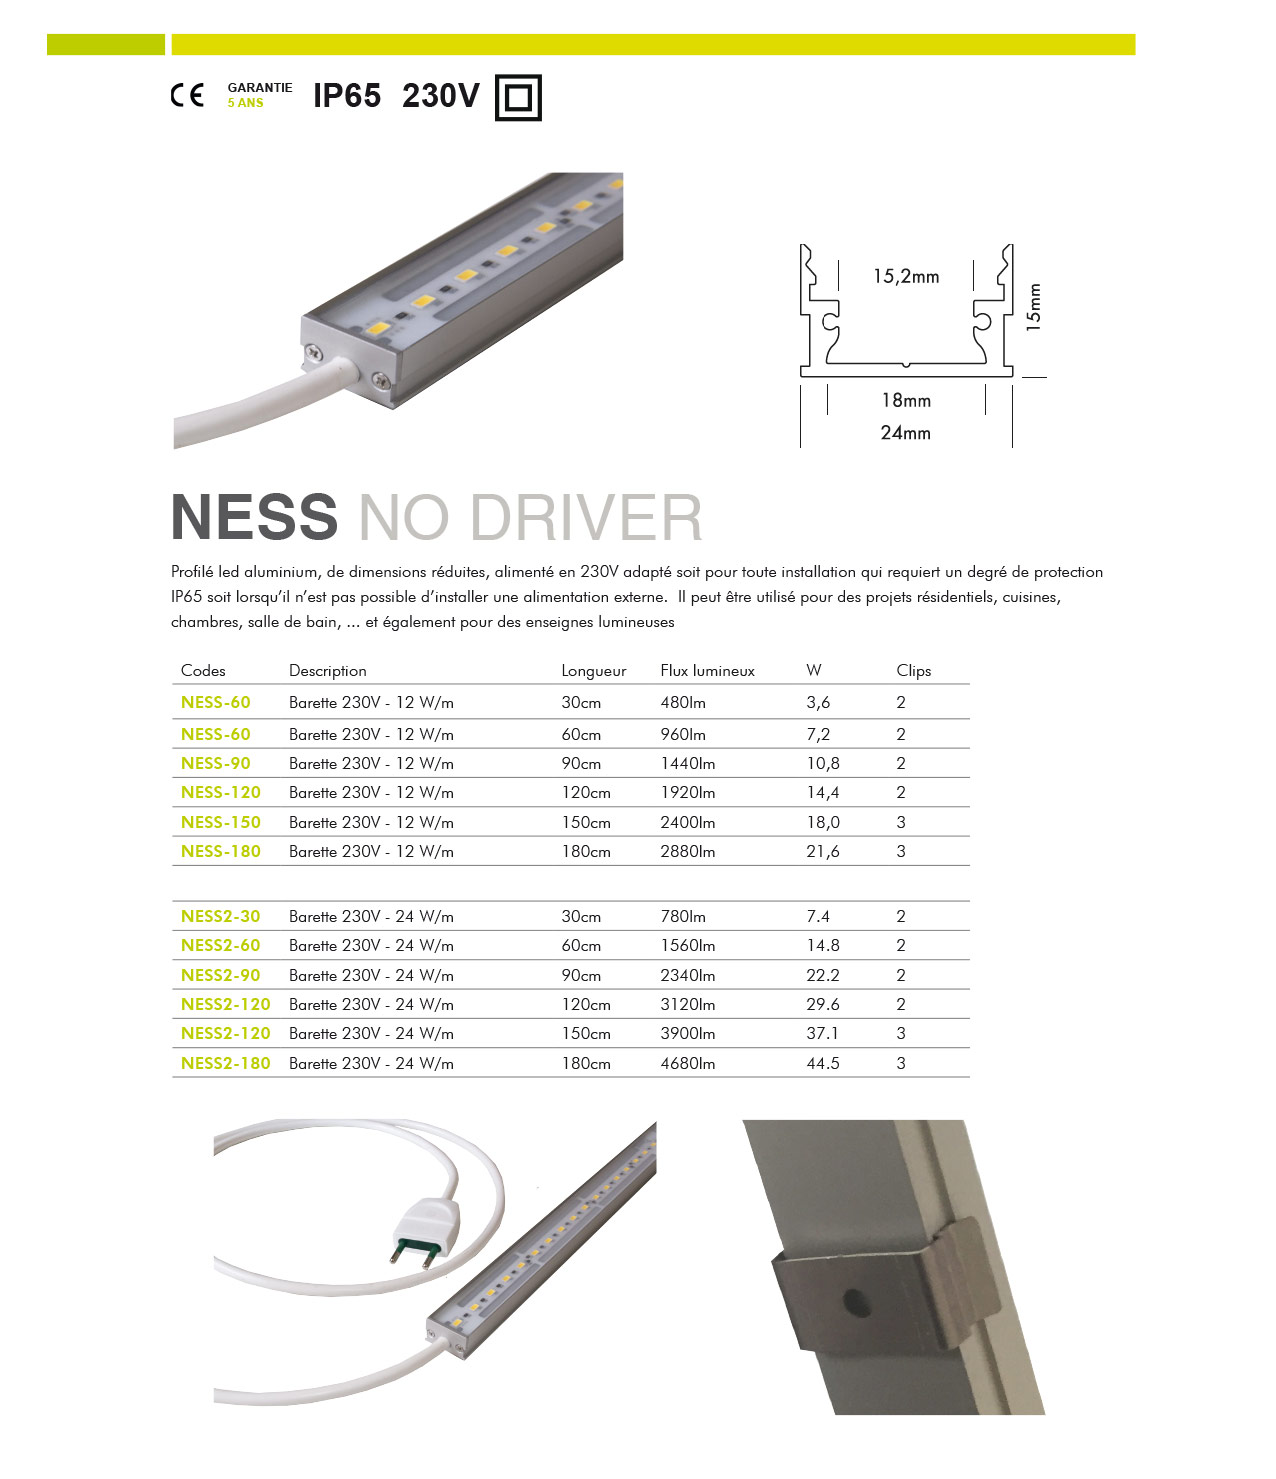 ness-drivers